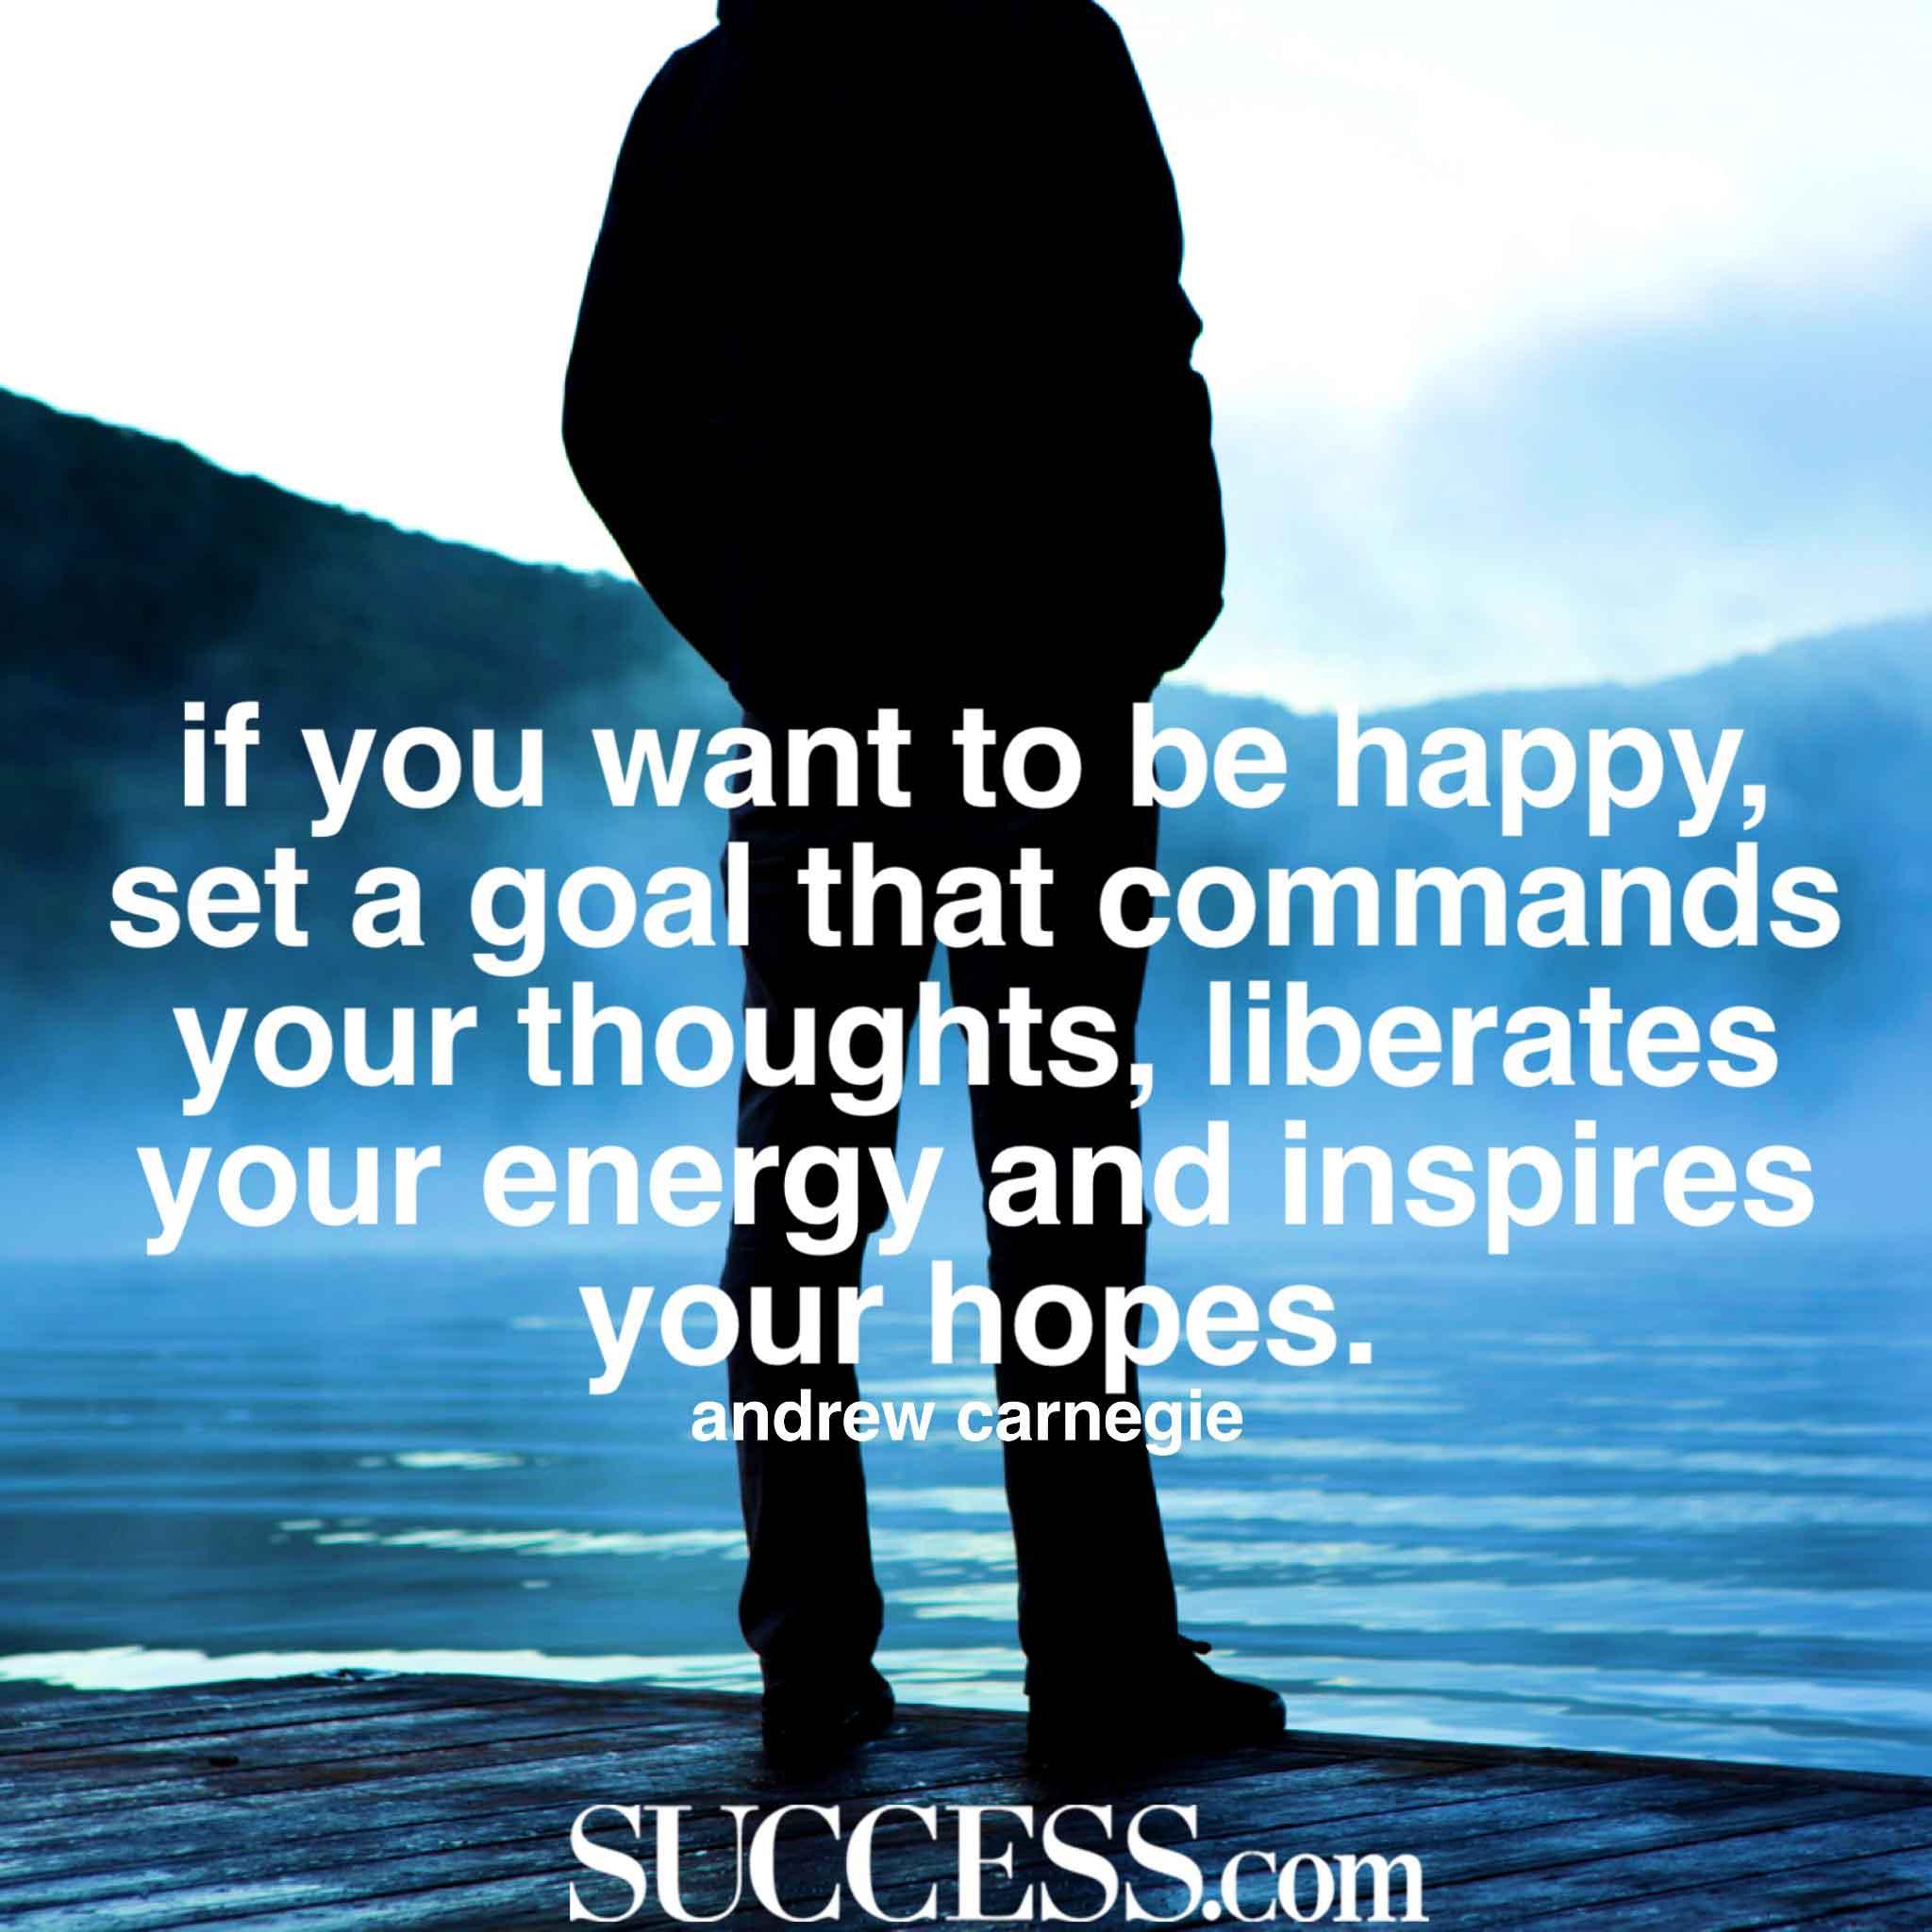 famous quotes about goals